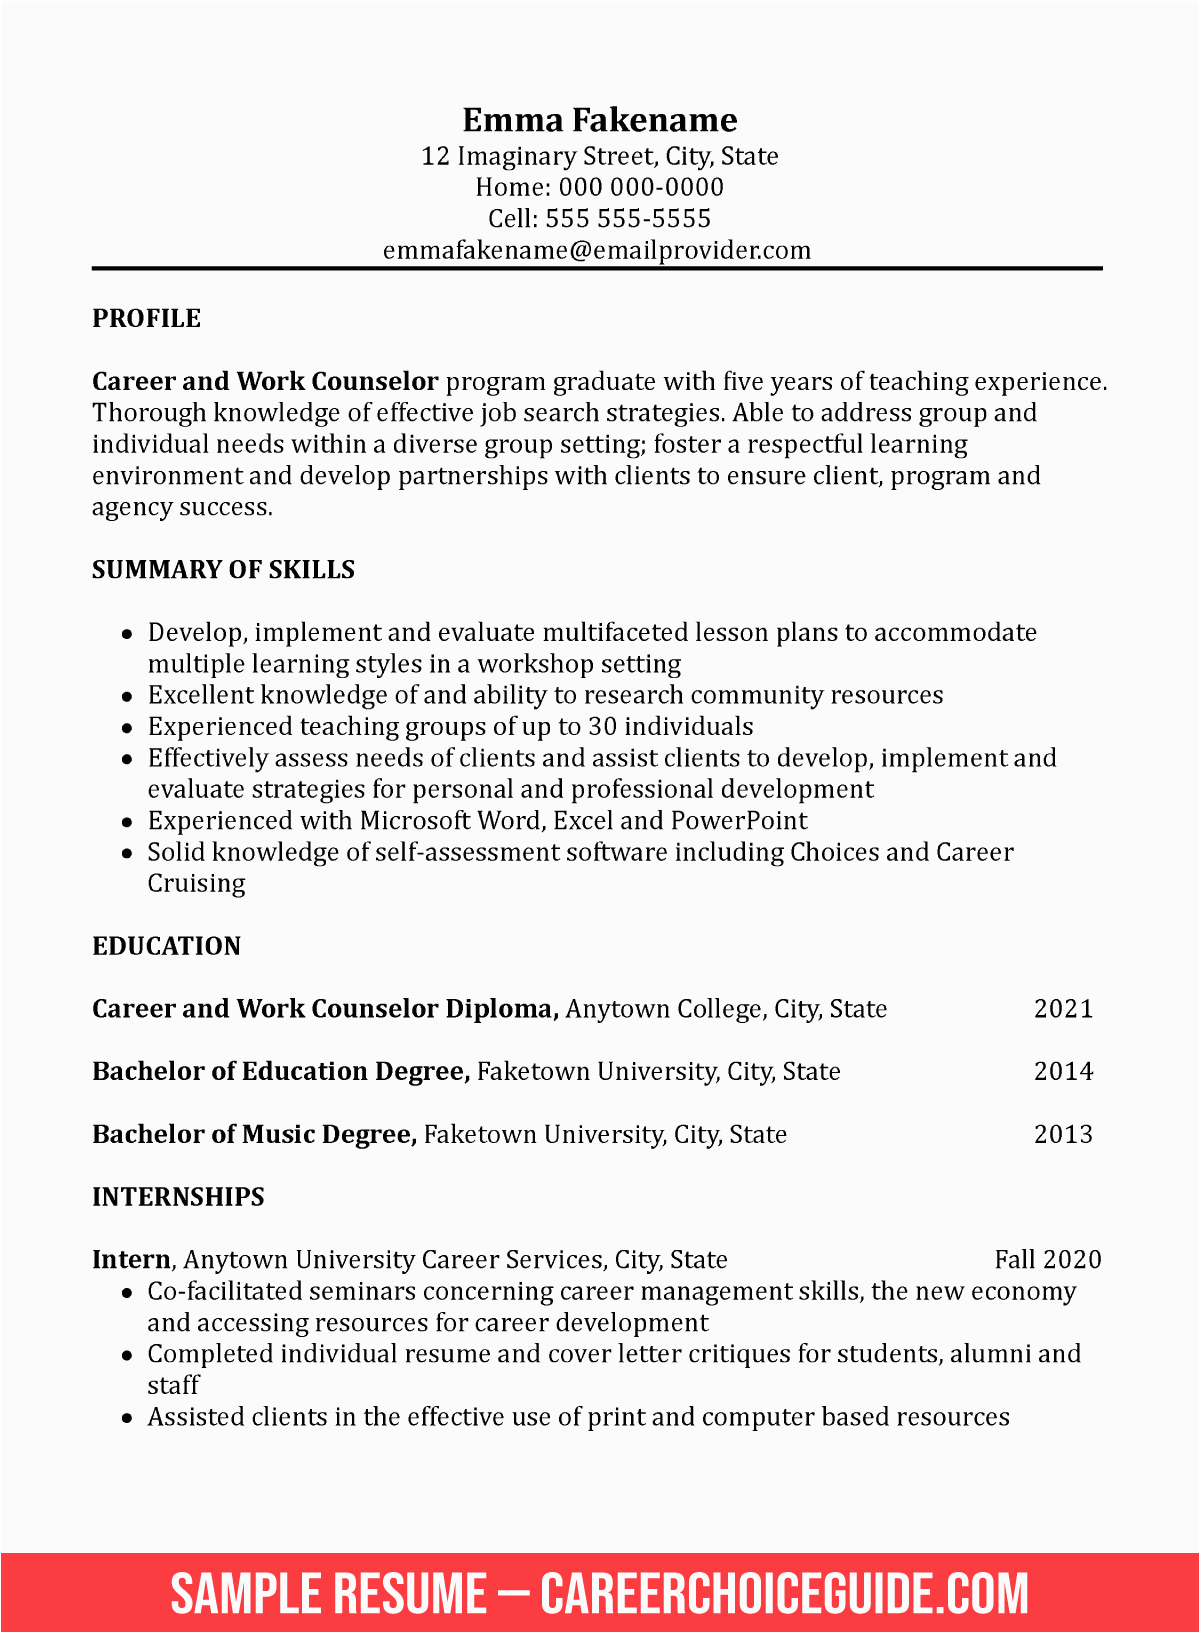 Sample Resume for New Job Seekers Job Application Work Experience Job Seeker Resume Sample